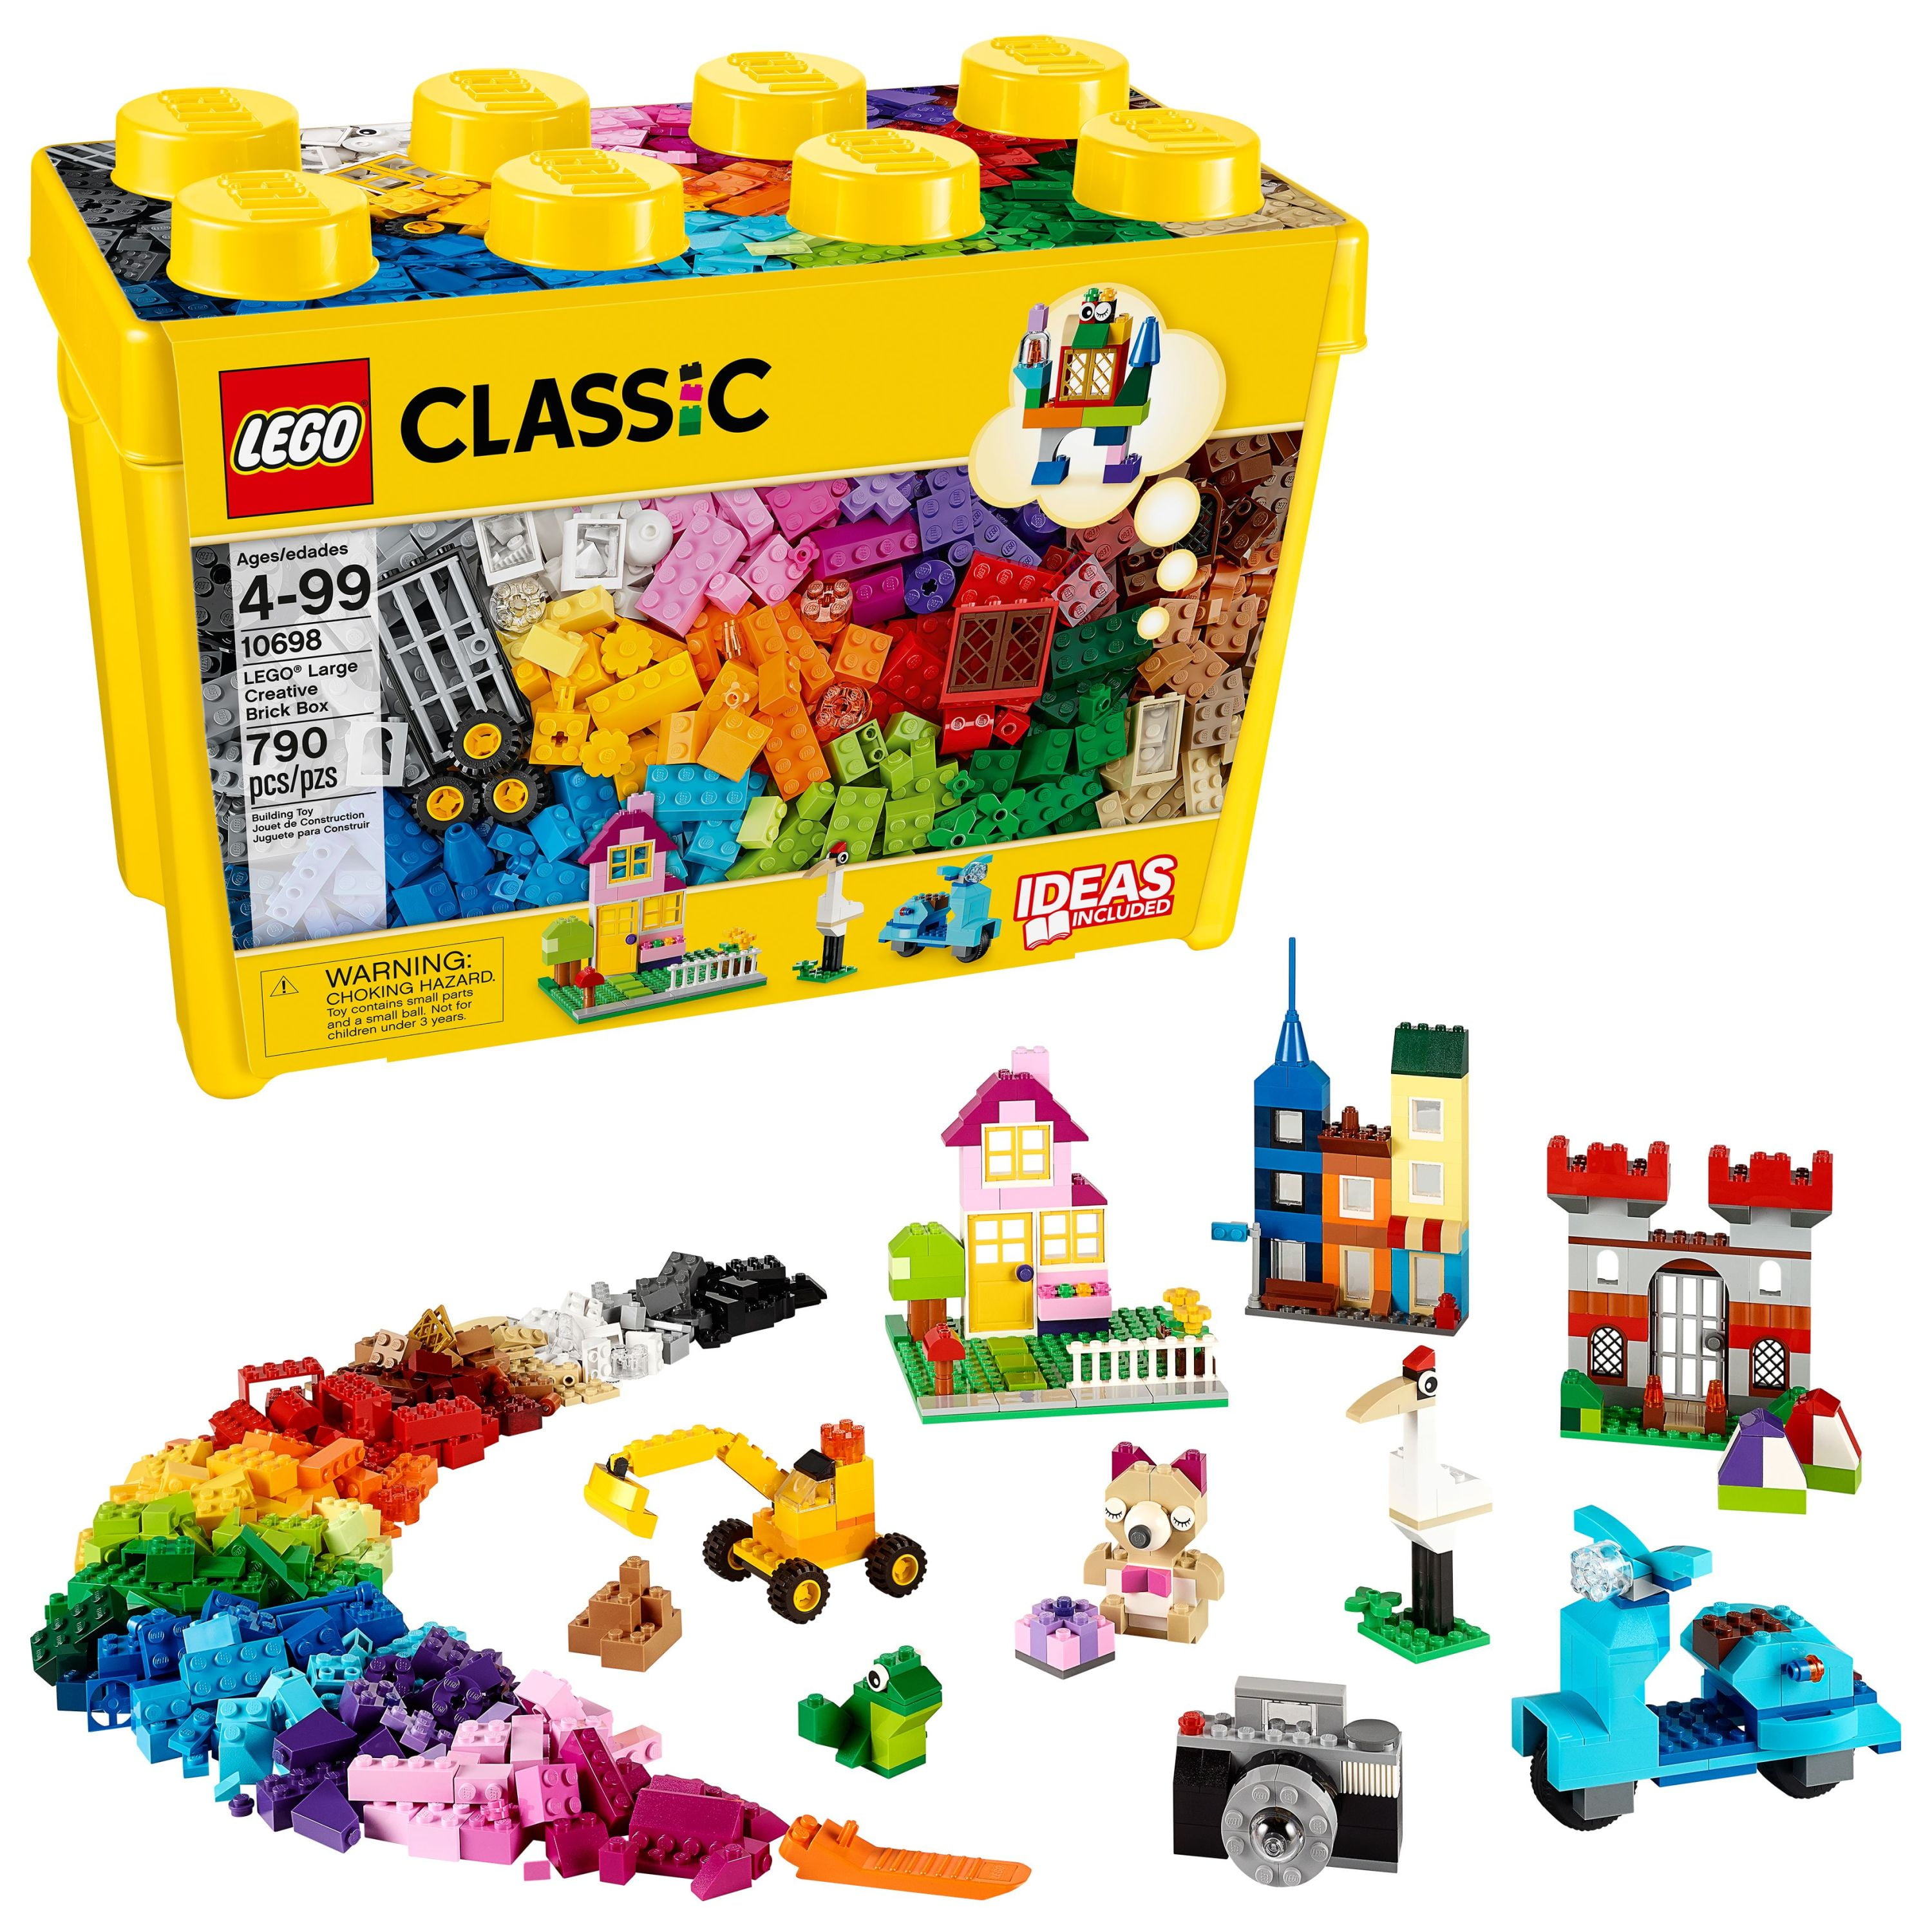 LEGO Large Creative Brick Box 10698 Building Toy Set pcs) - Walmart.com